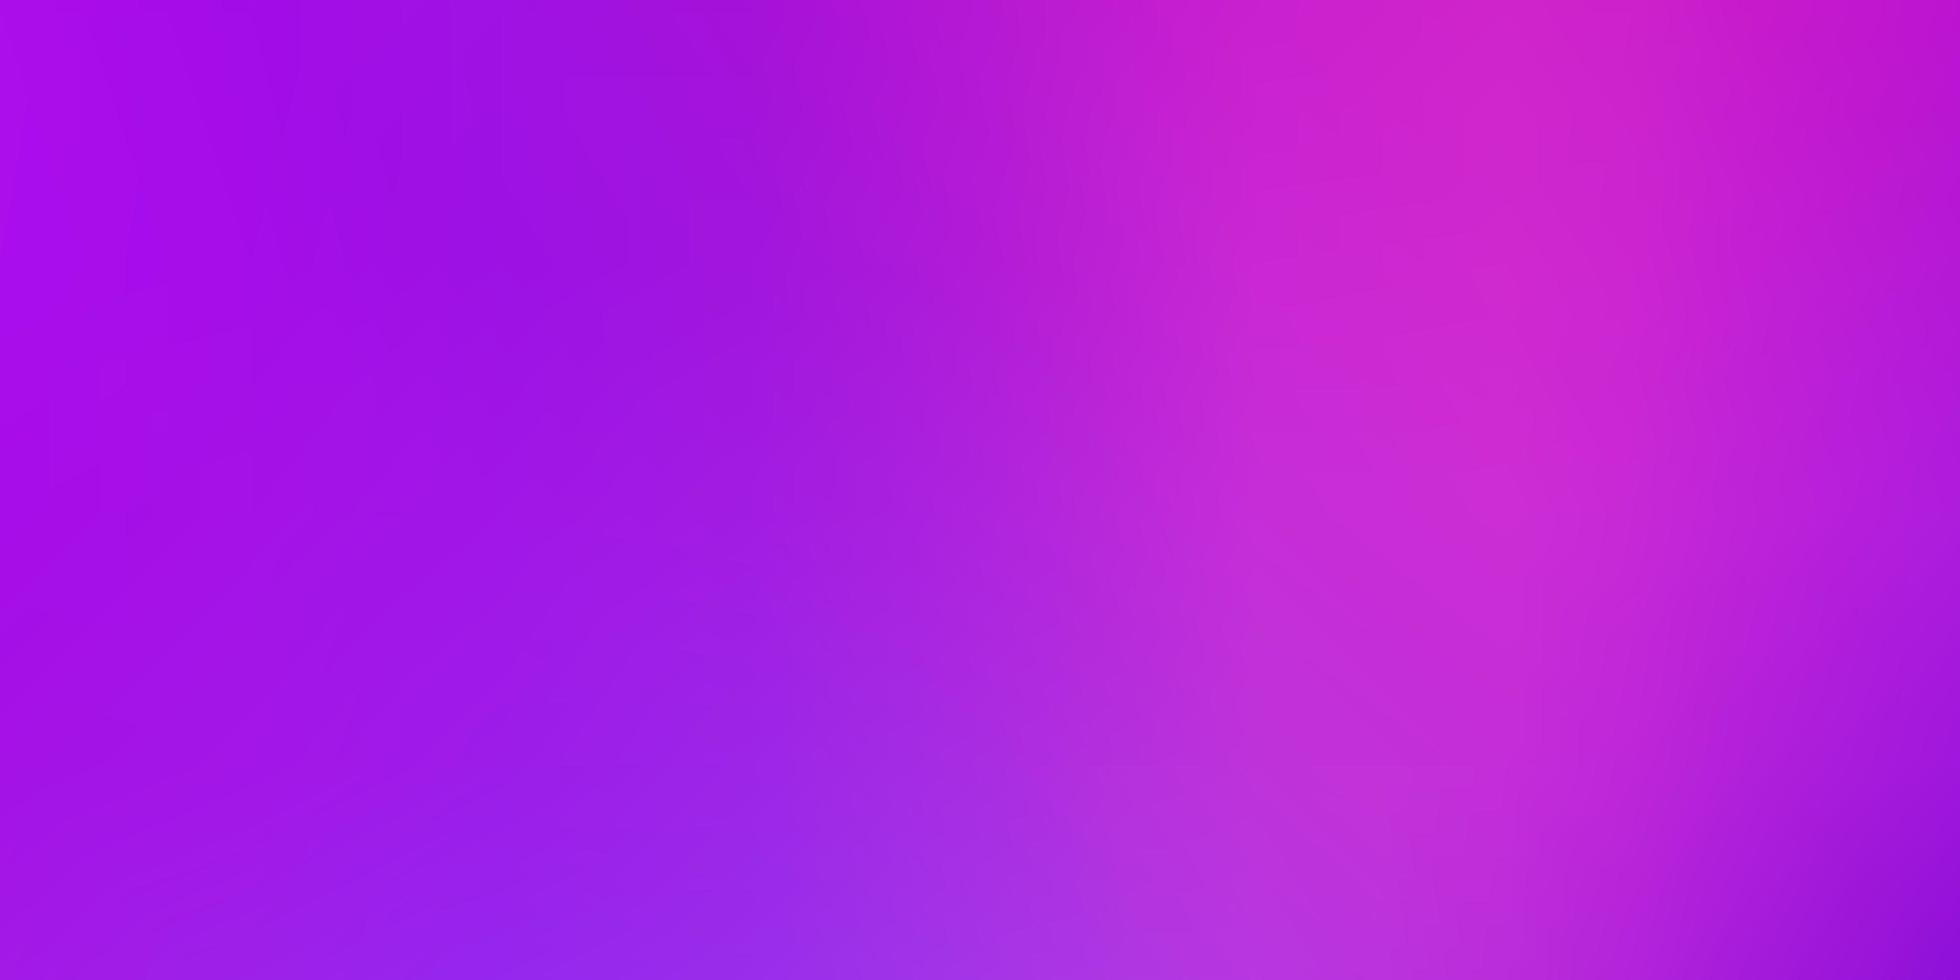 Light Purple, Pink vector modern blurred backdrop.